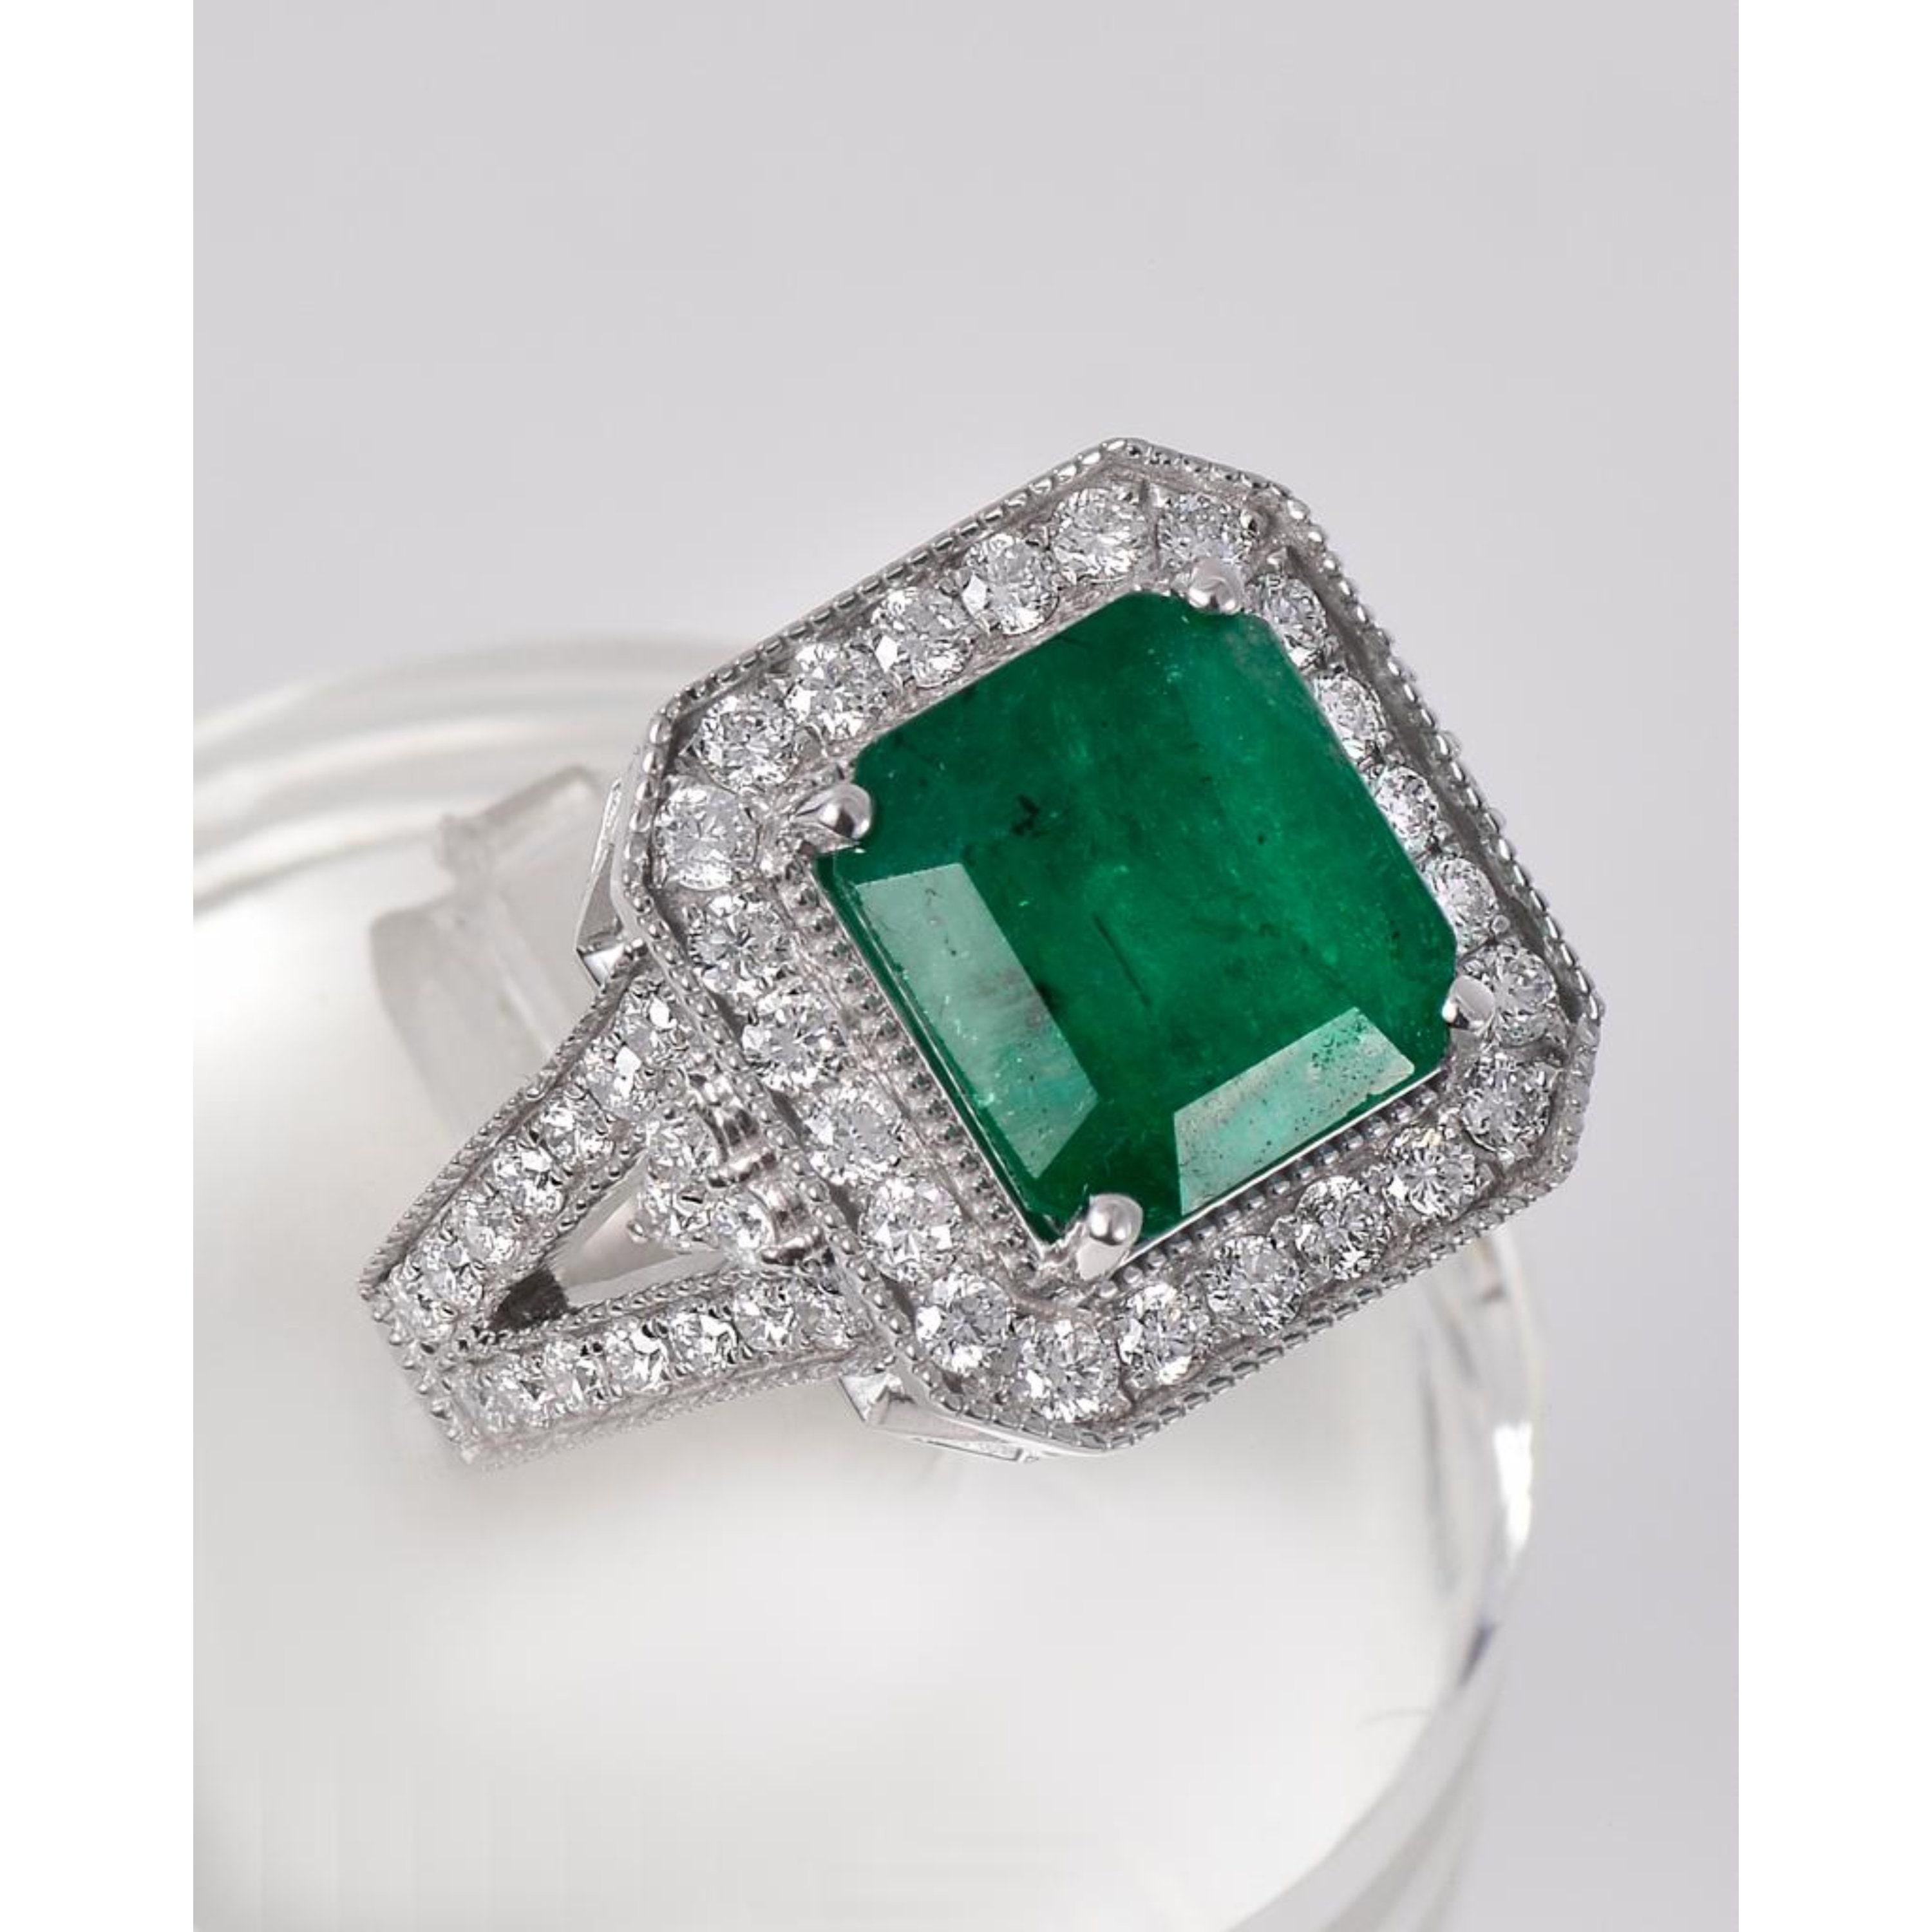 For Sale:  4 Carat Cushion Cut Halo Emerald Engagement Ring Art Deco Diamond Wedding Ring 6